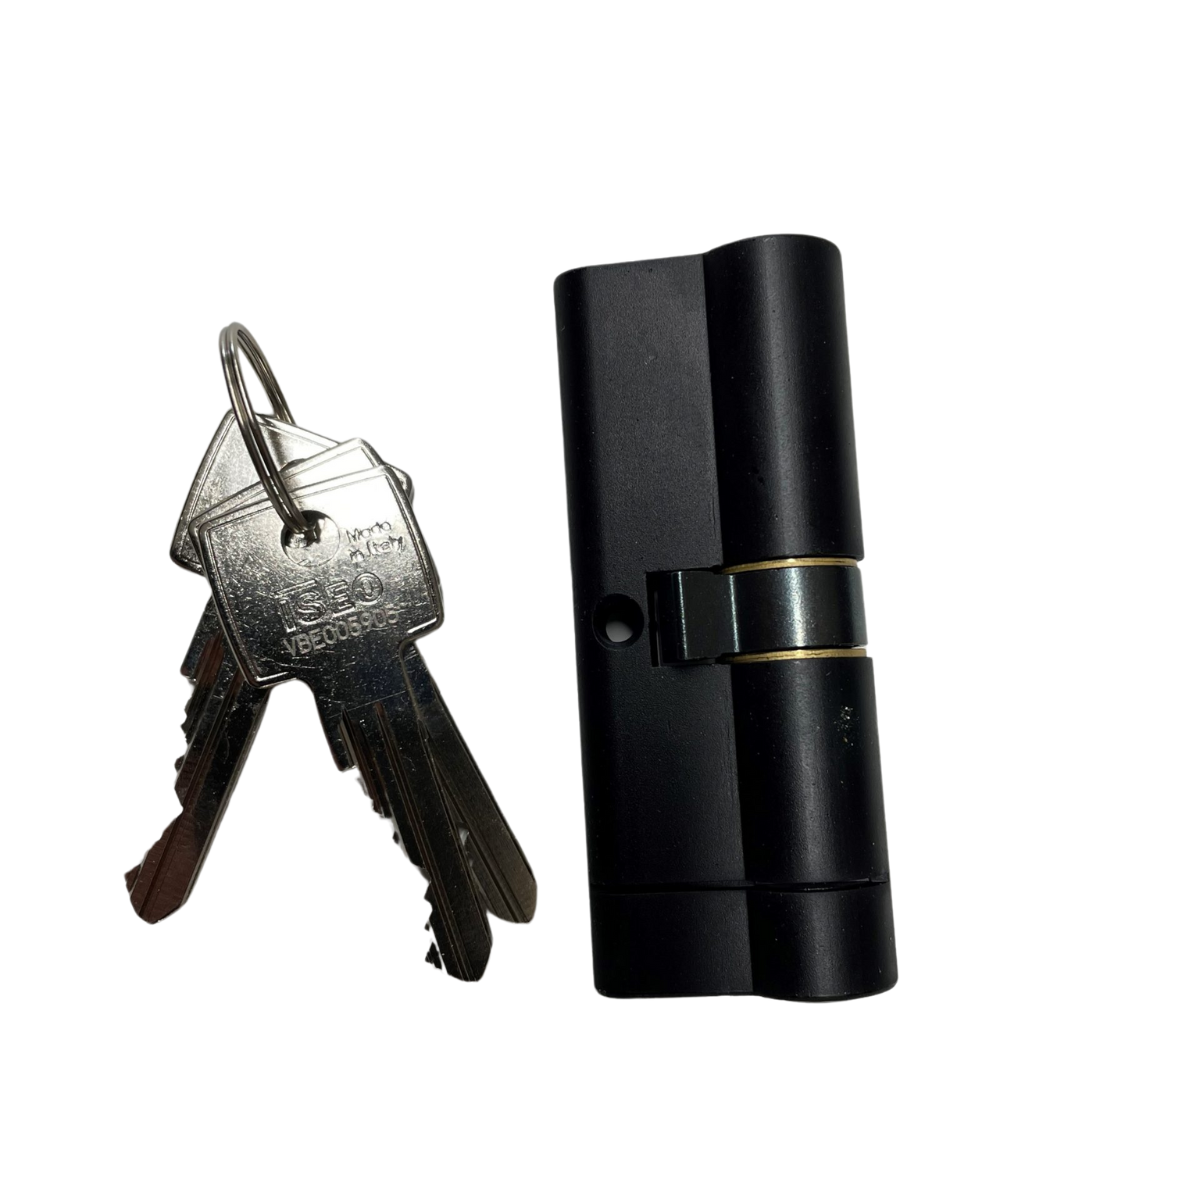 Mat zwart Iseo Cilinder 40-40 SKG*** met 3 sleutels